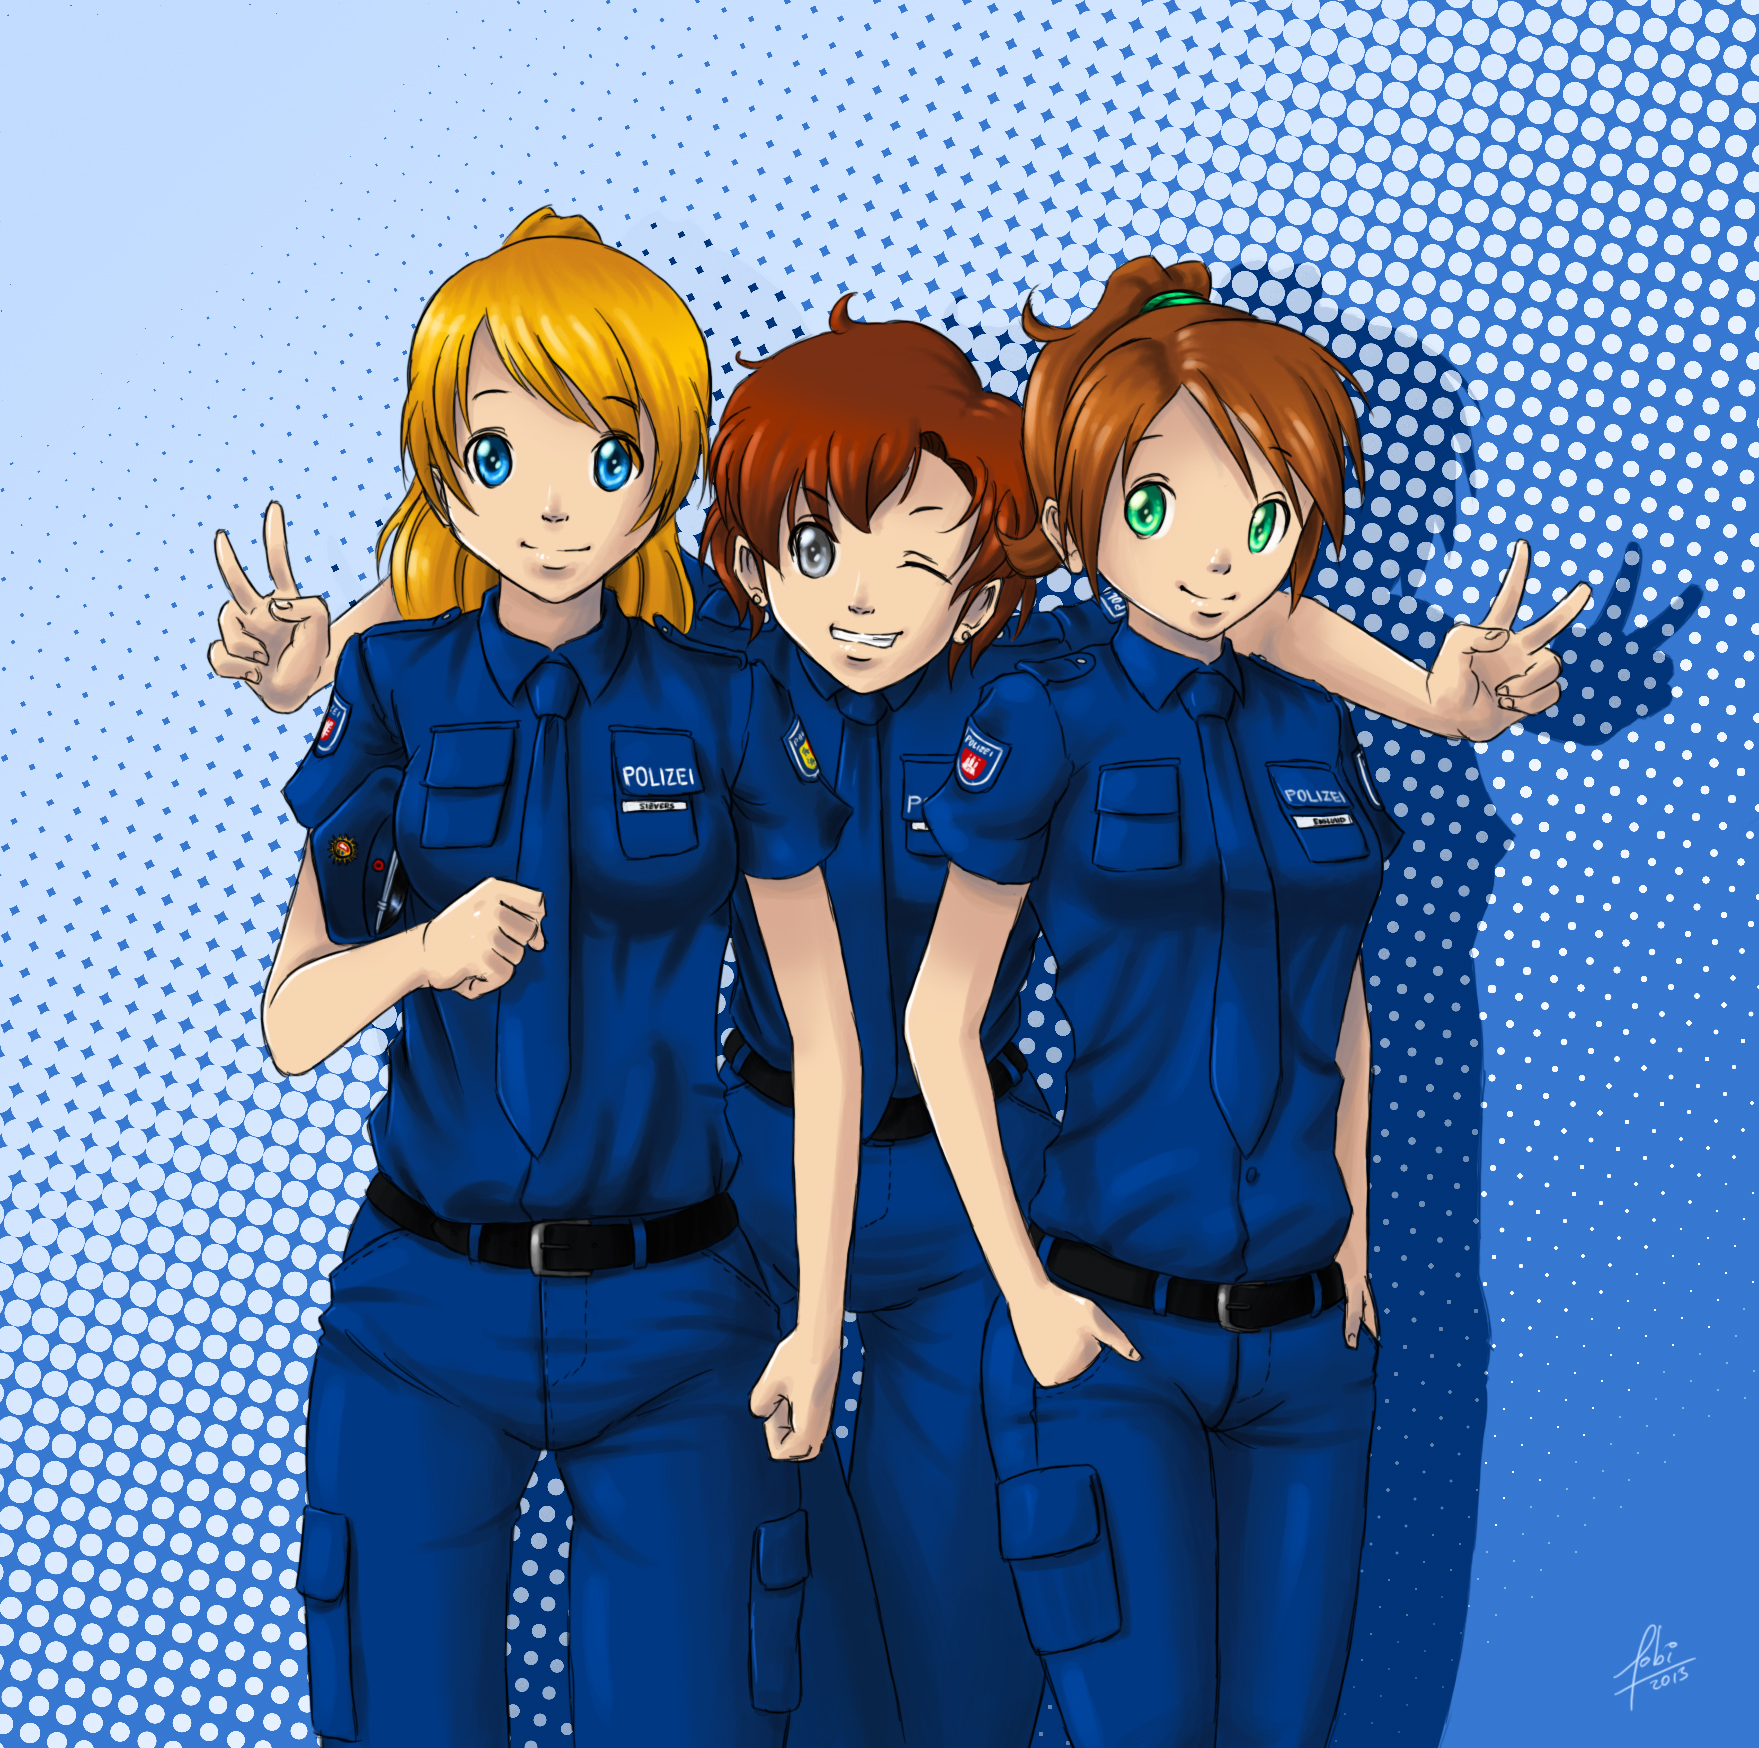 :AT: Police girls